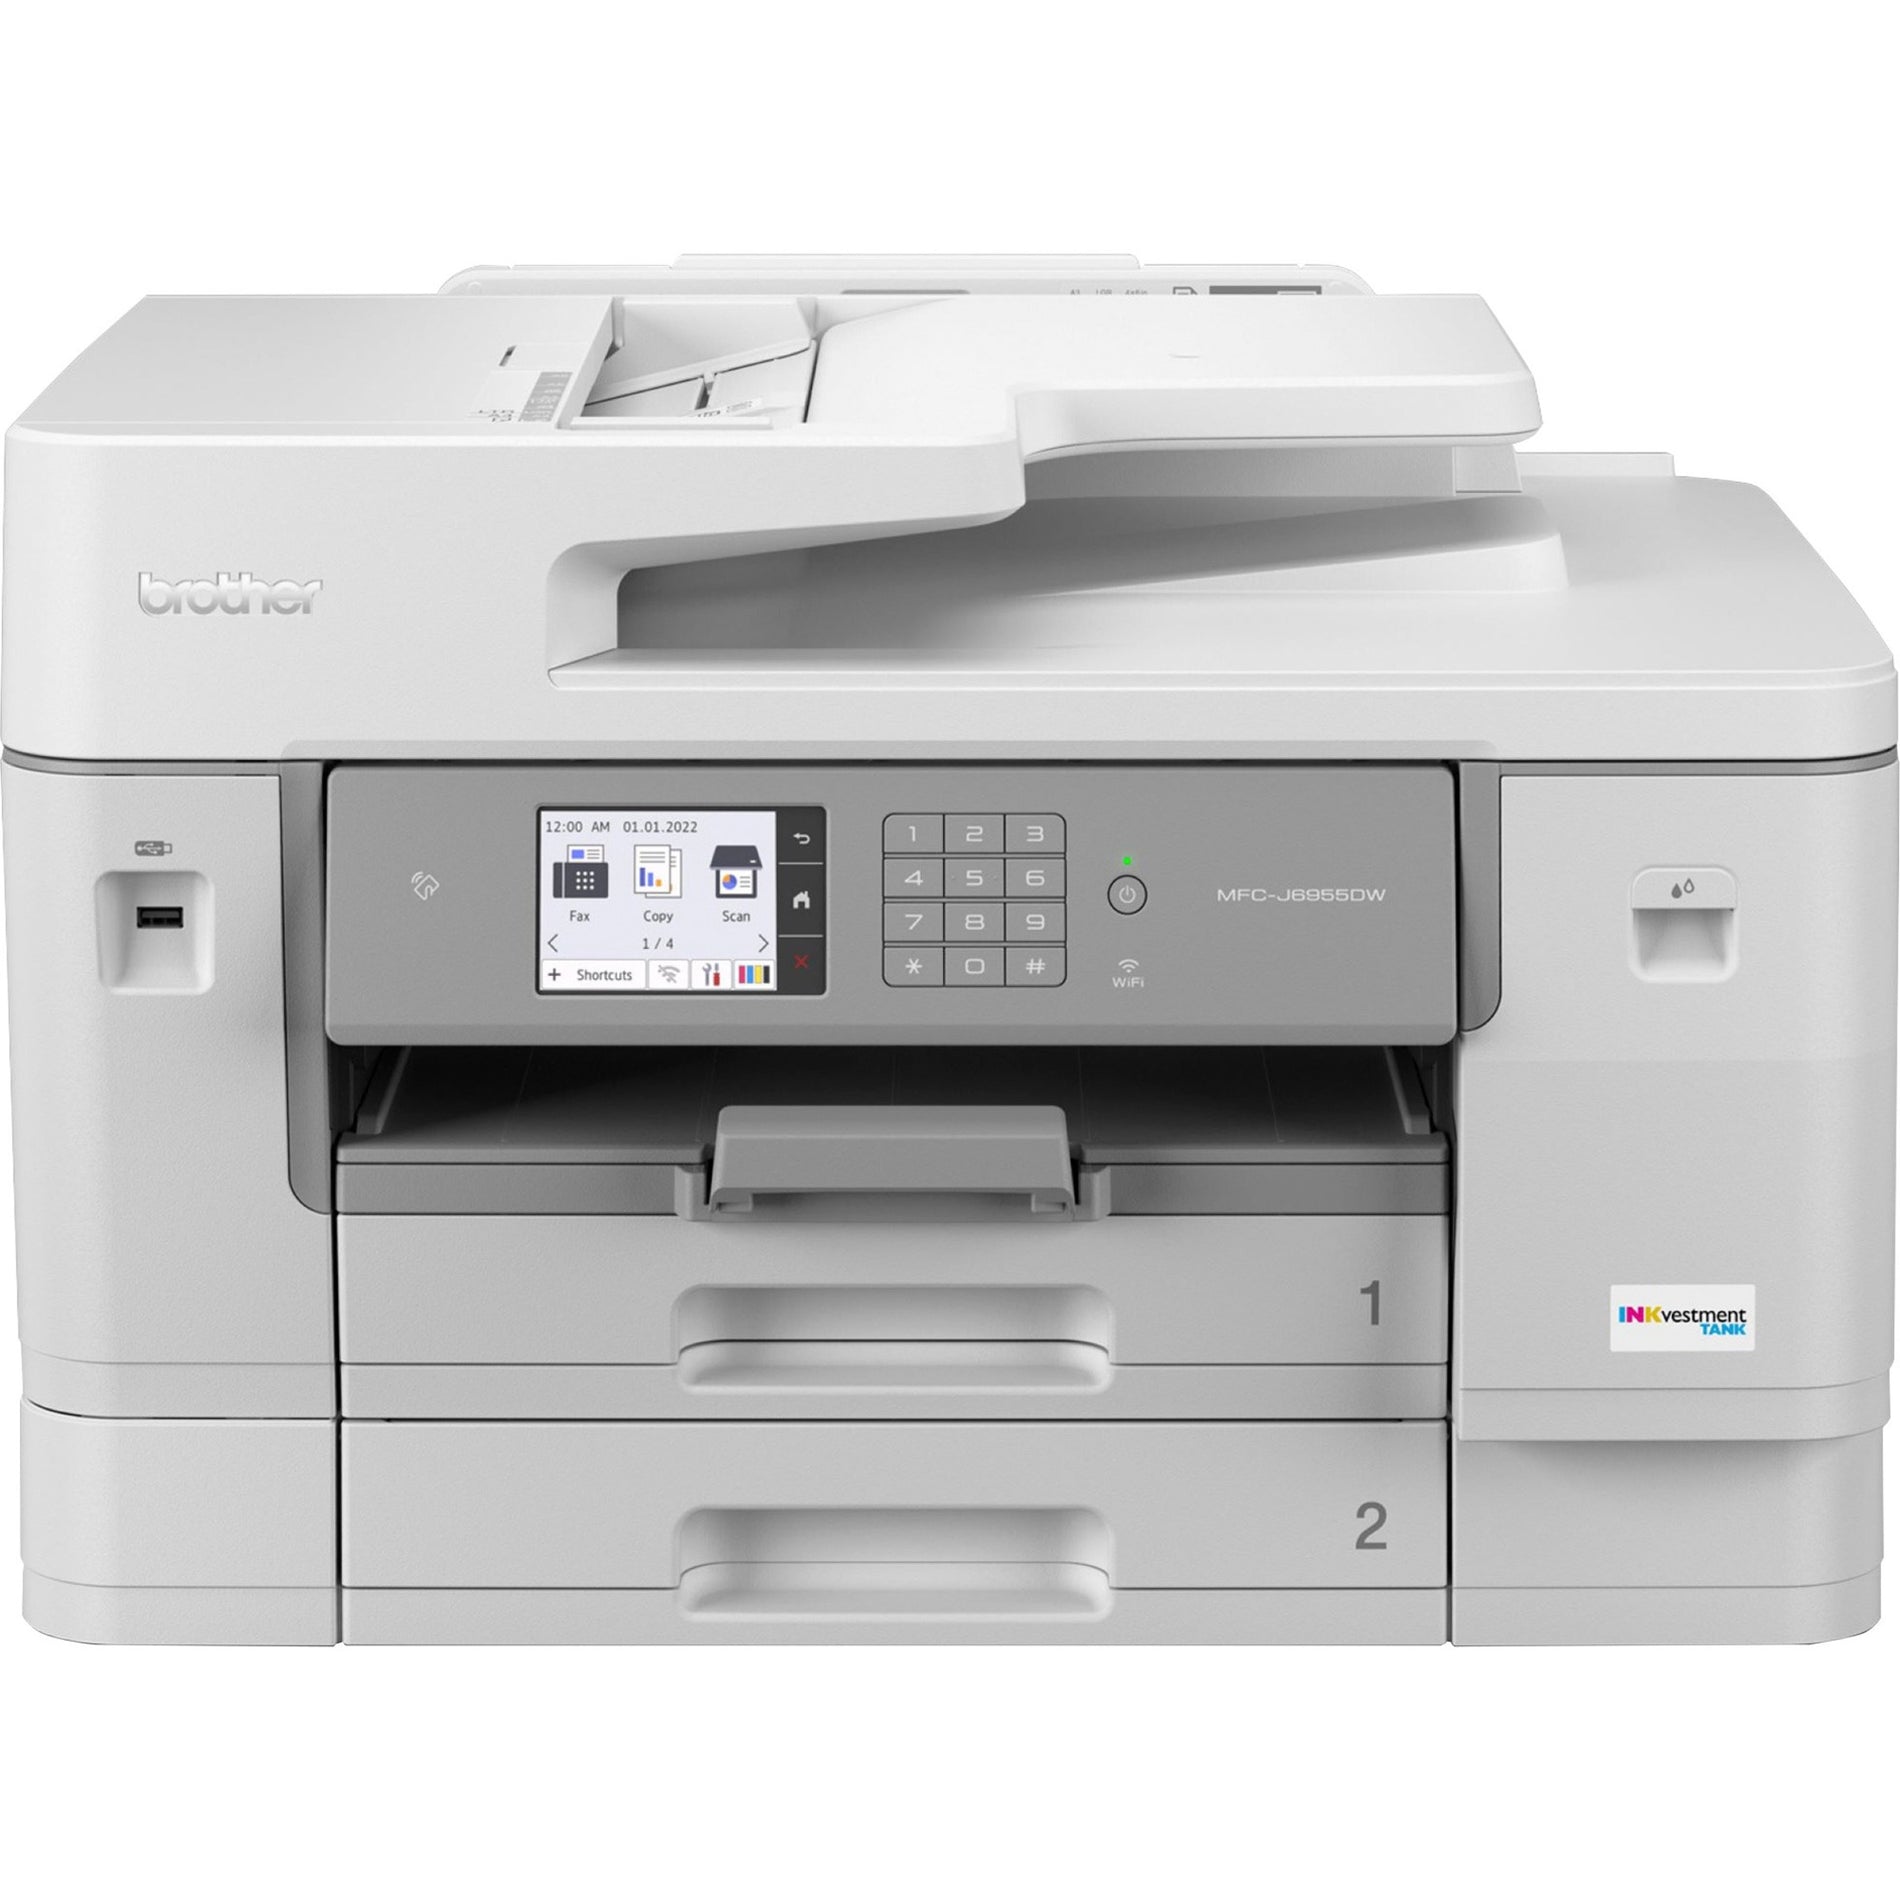 Brother MFC-J6955DW Inkjet Multifunction Printer, Color, Wireless, 2 Year Warranty